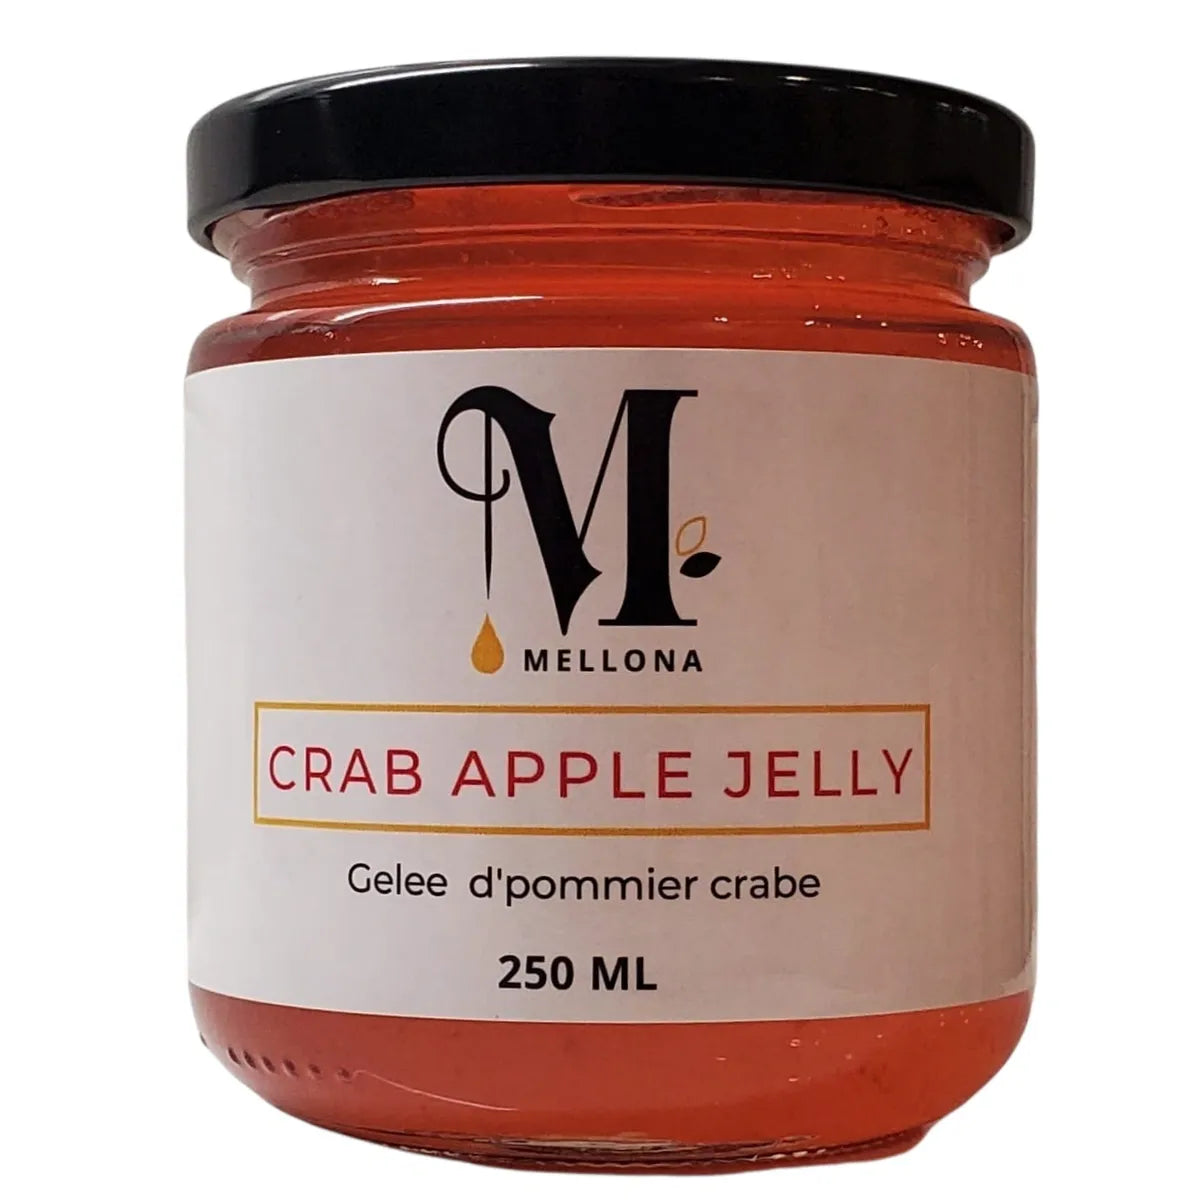 Crab Apple Jelly